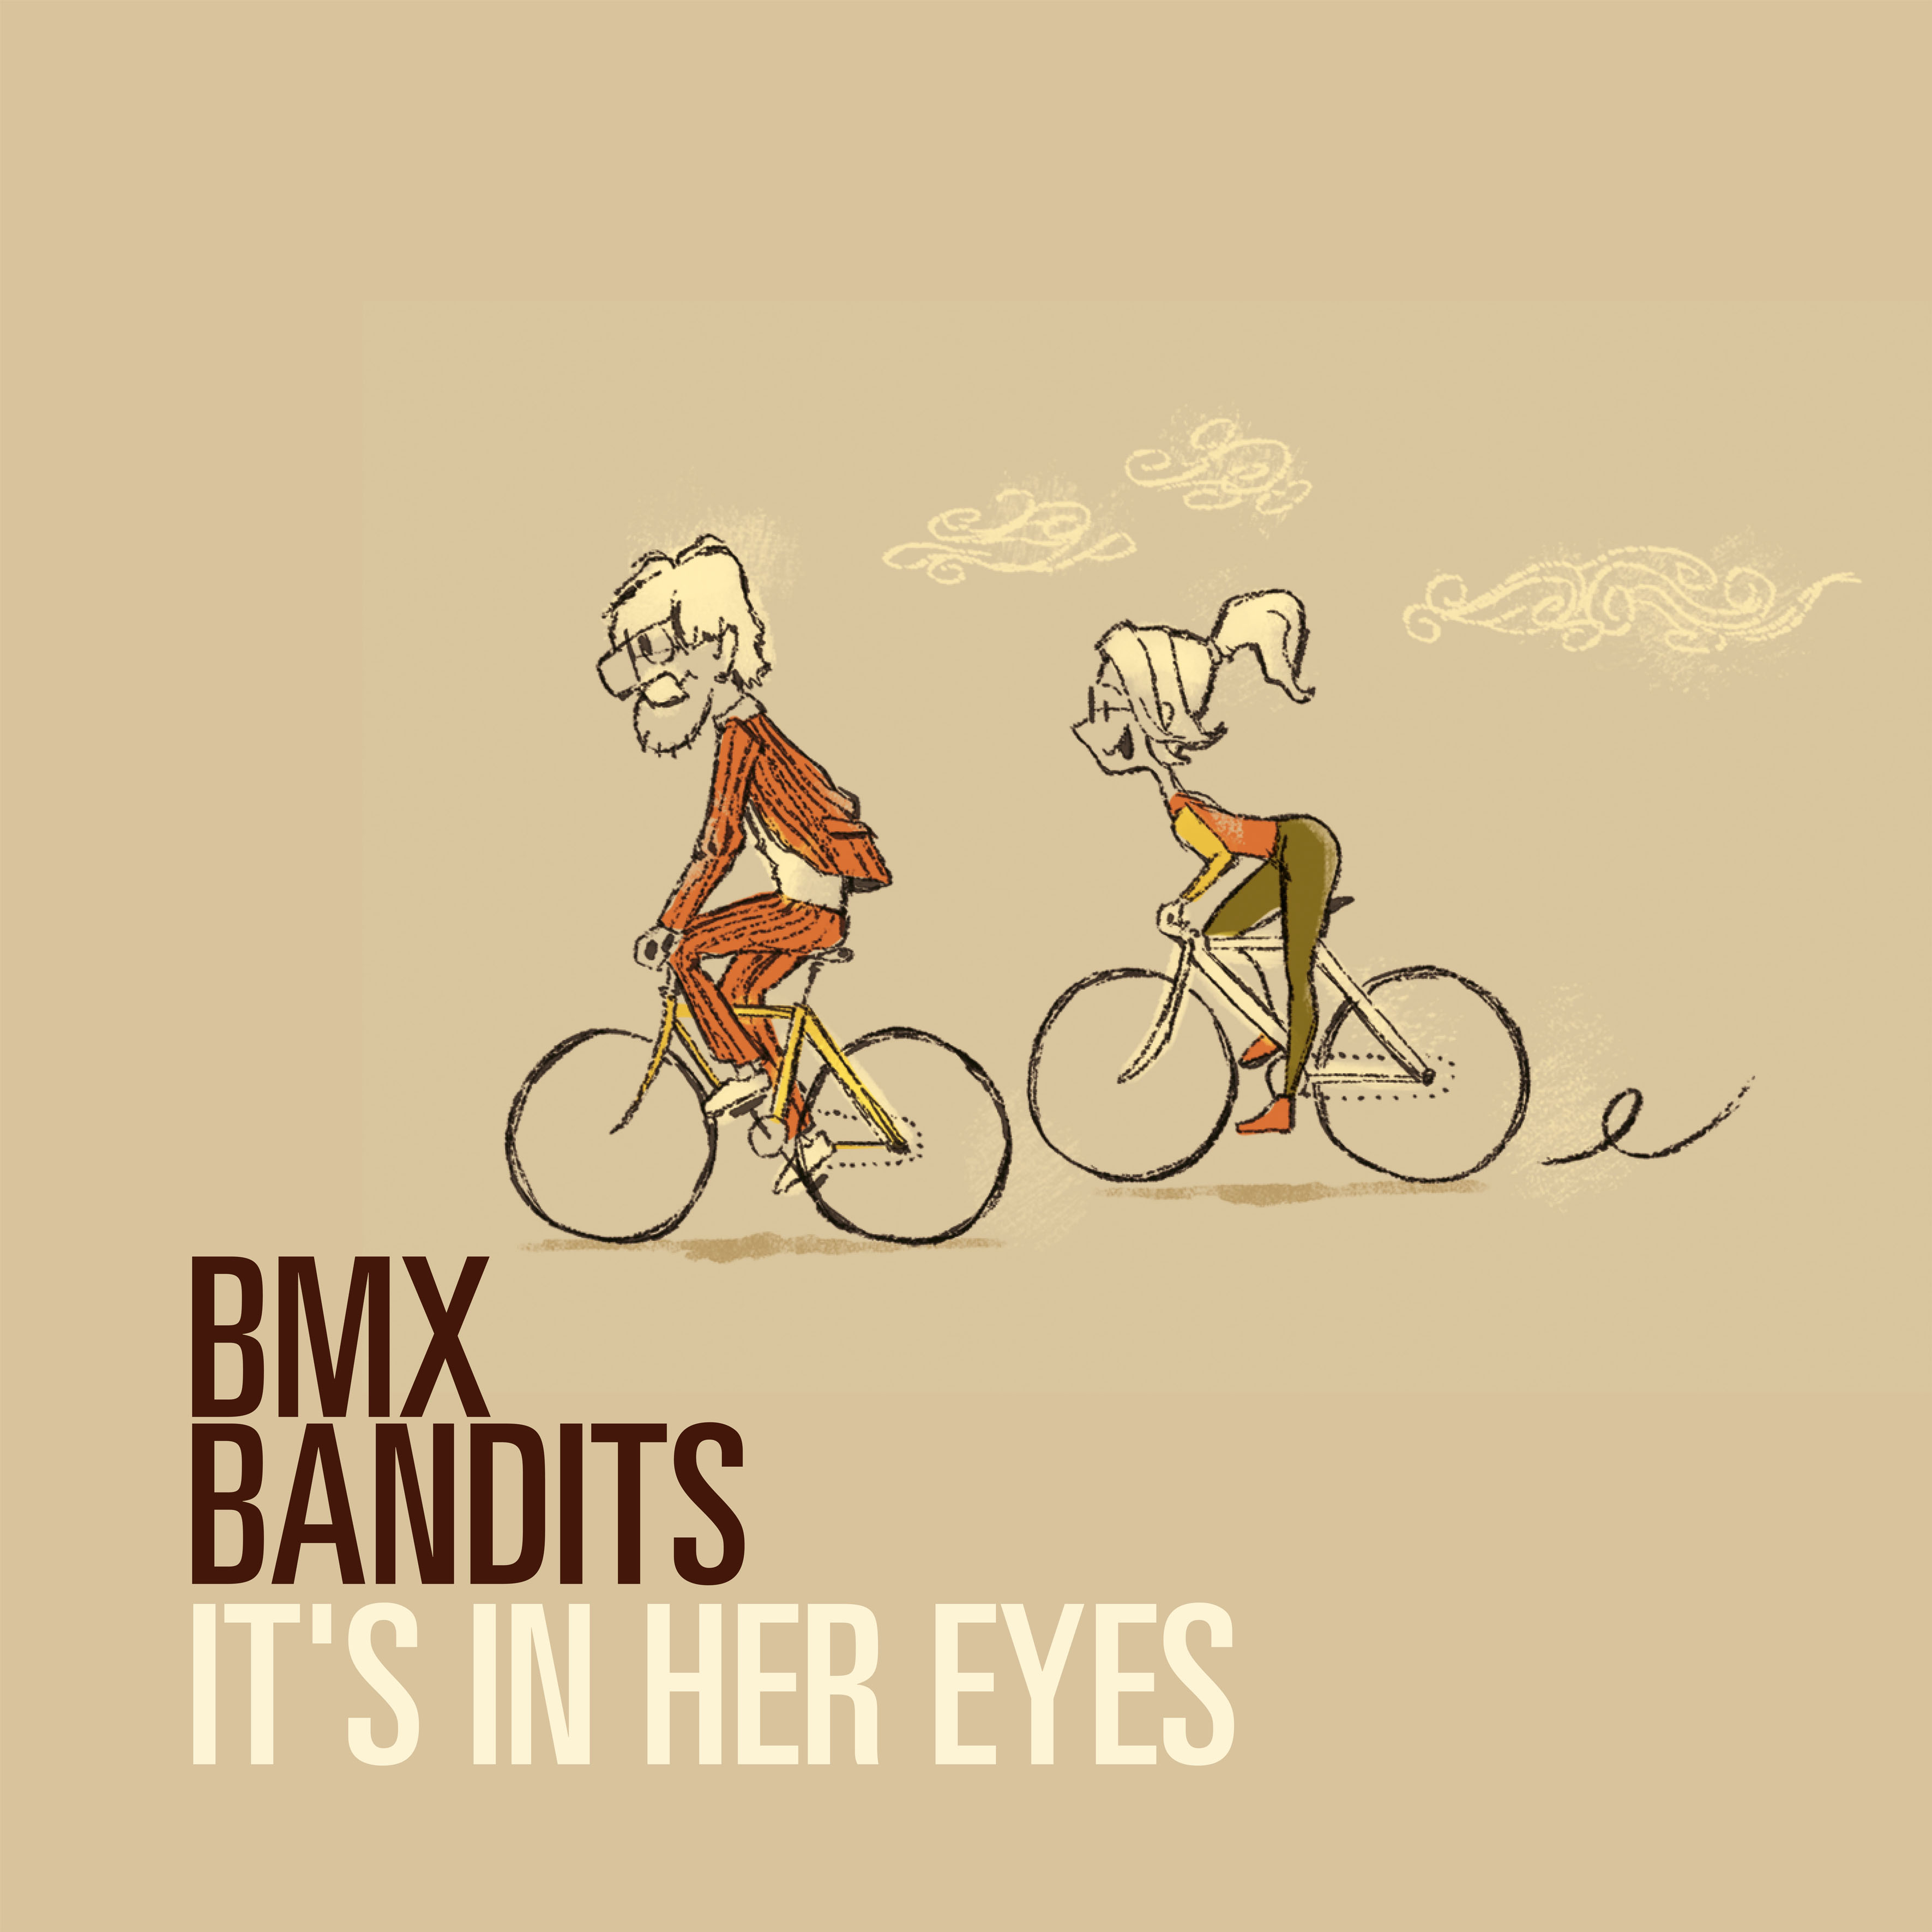 BMX Bandits "It's In Her Eyes" Single Digital